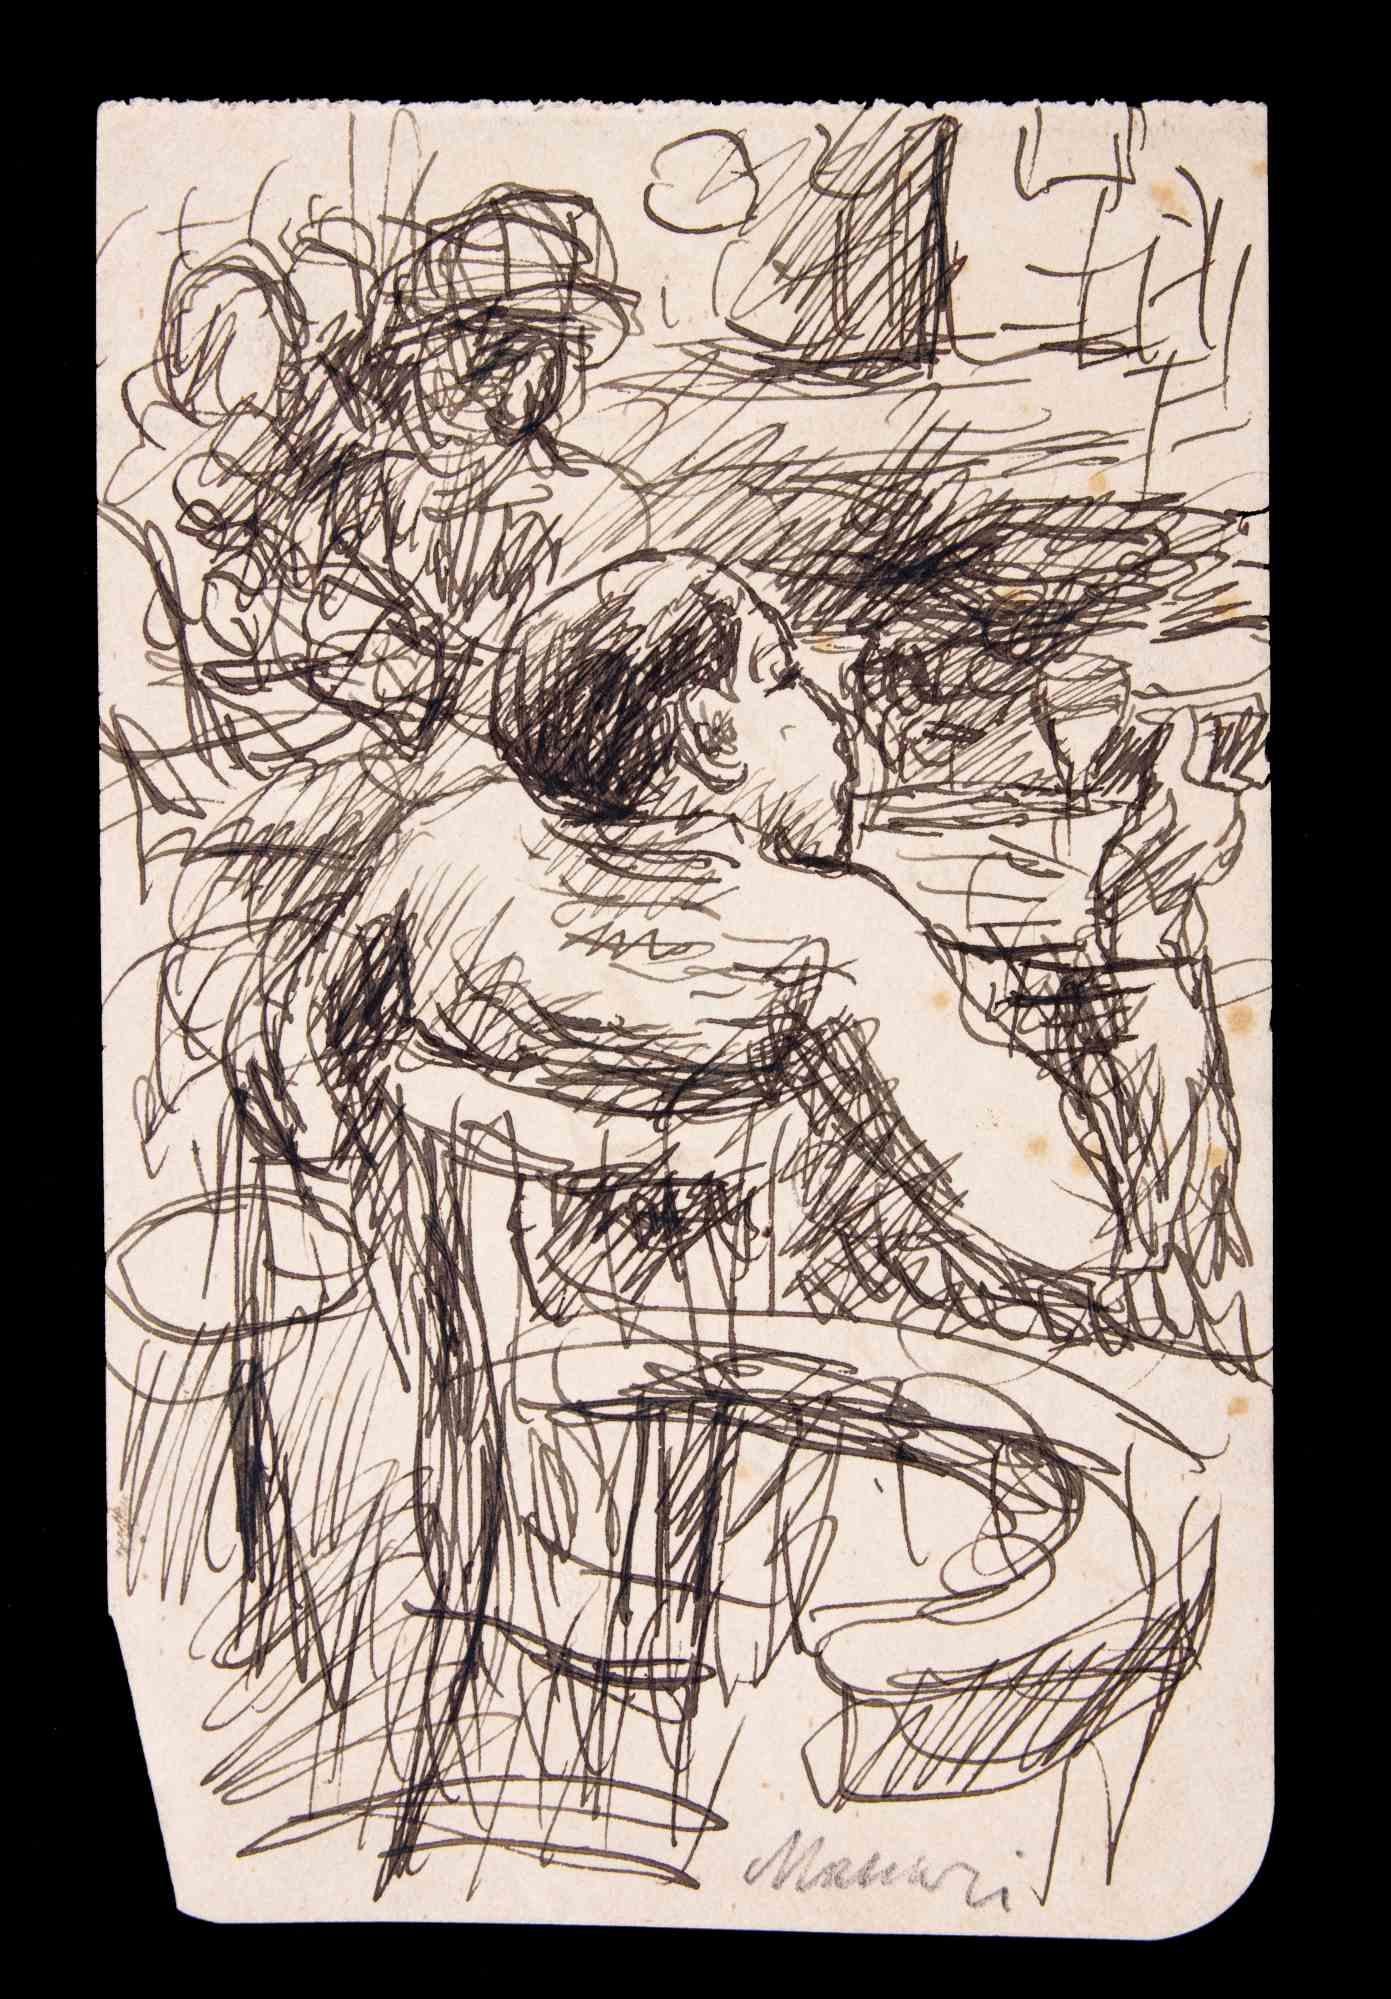 At the Cafe - Drawing by Mino Maccari - 1940s